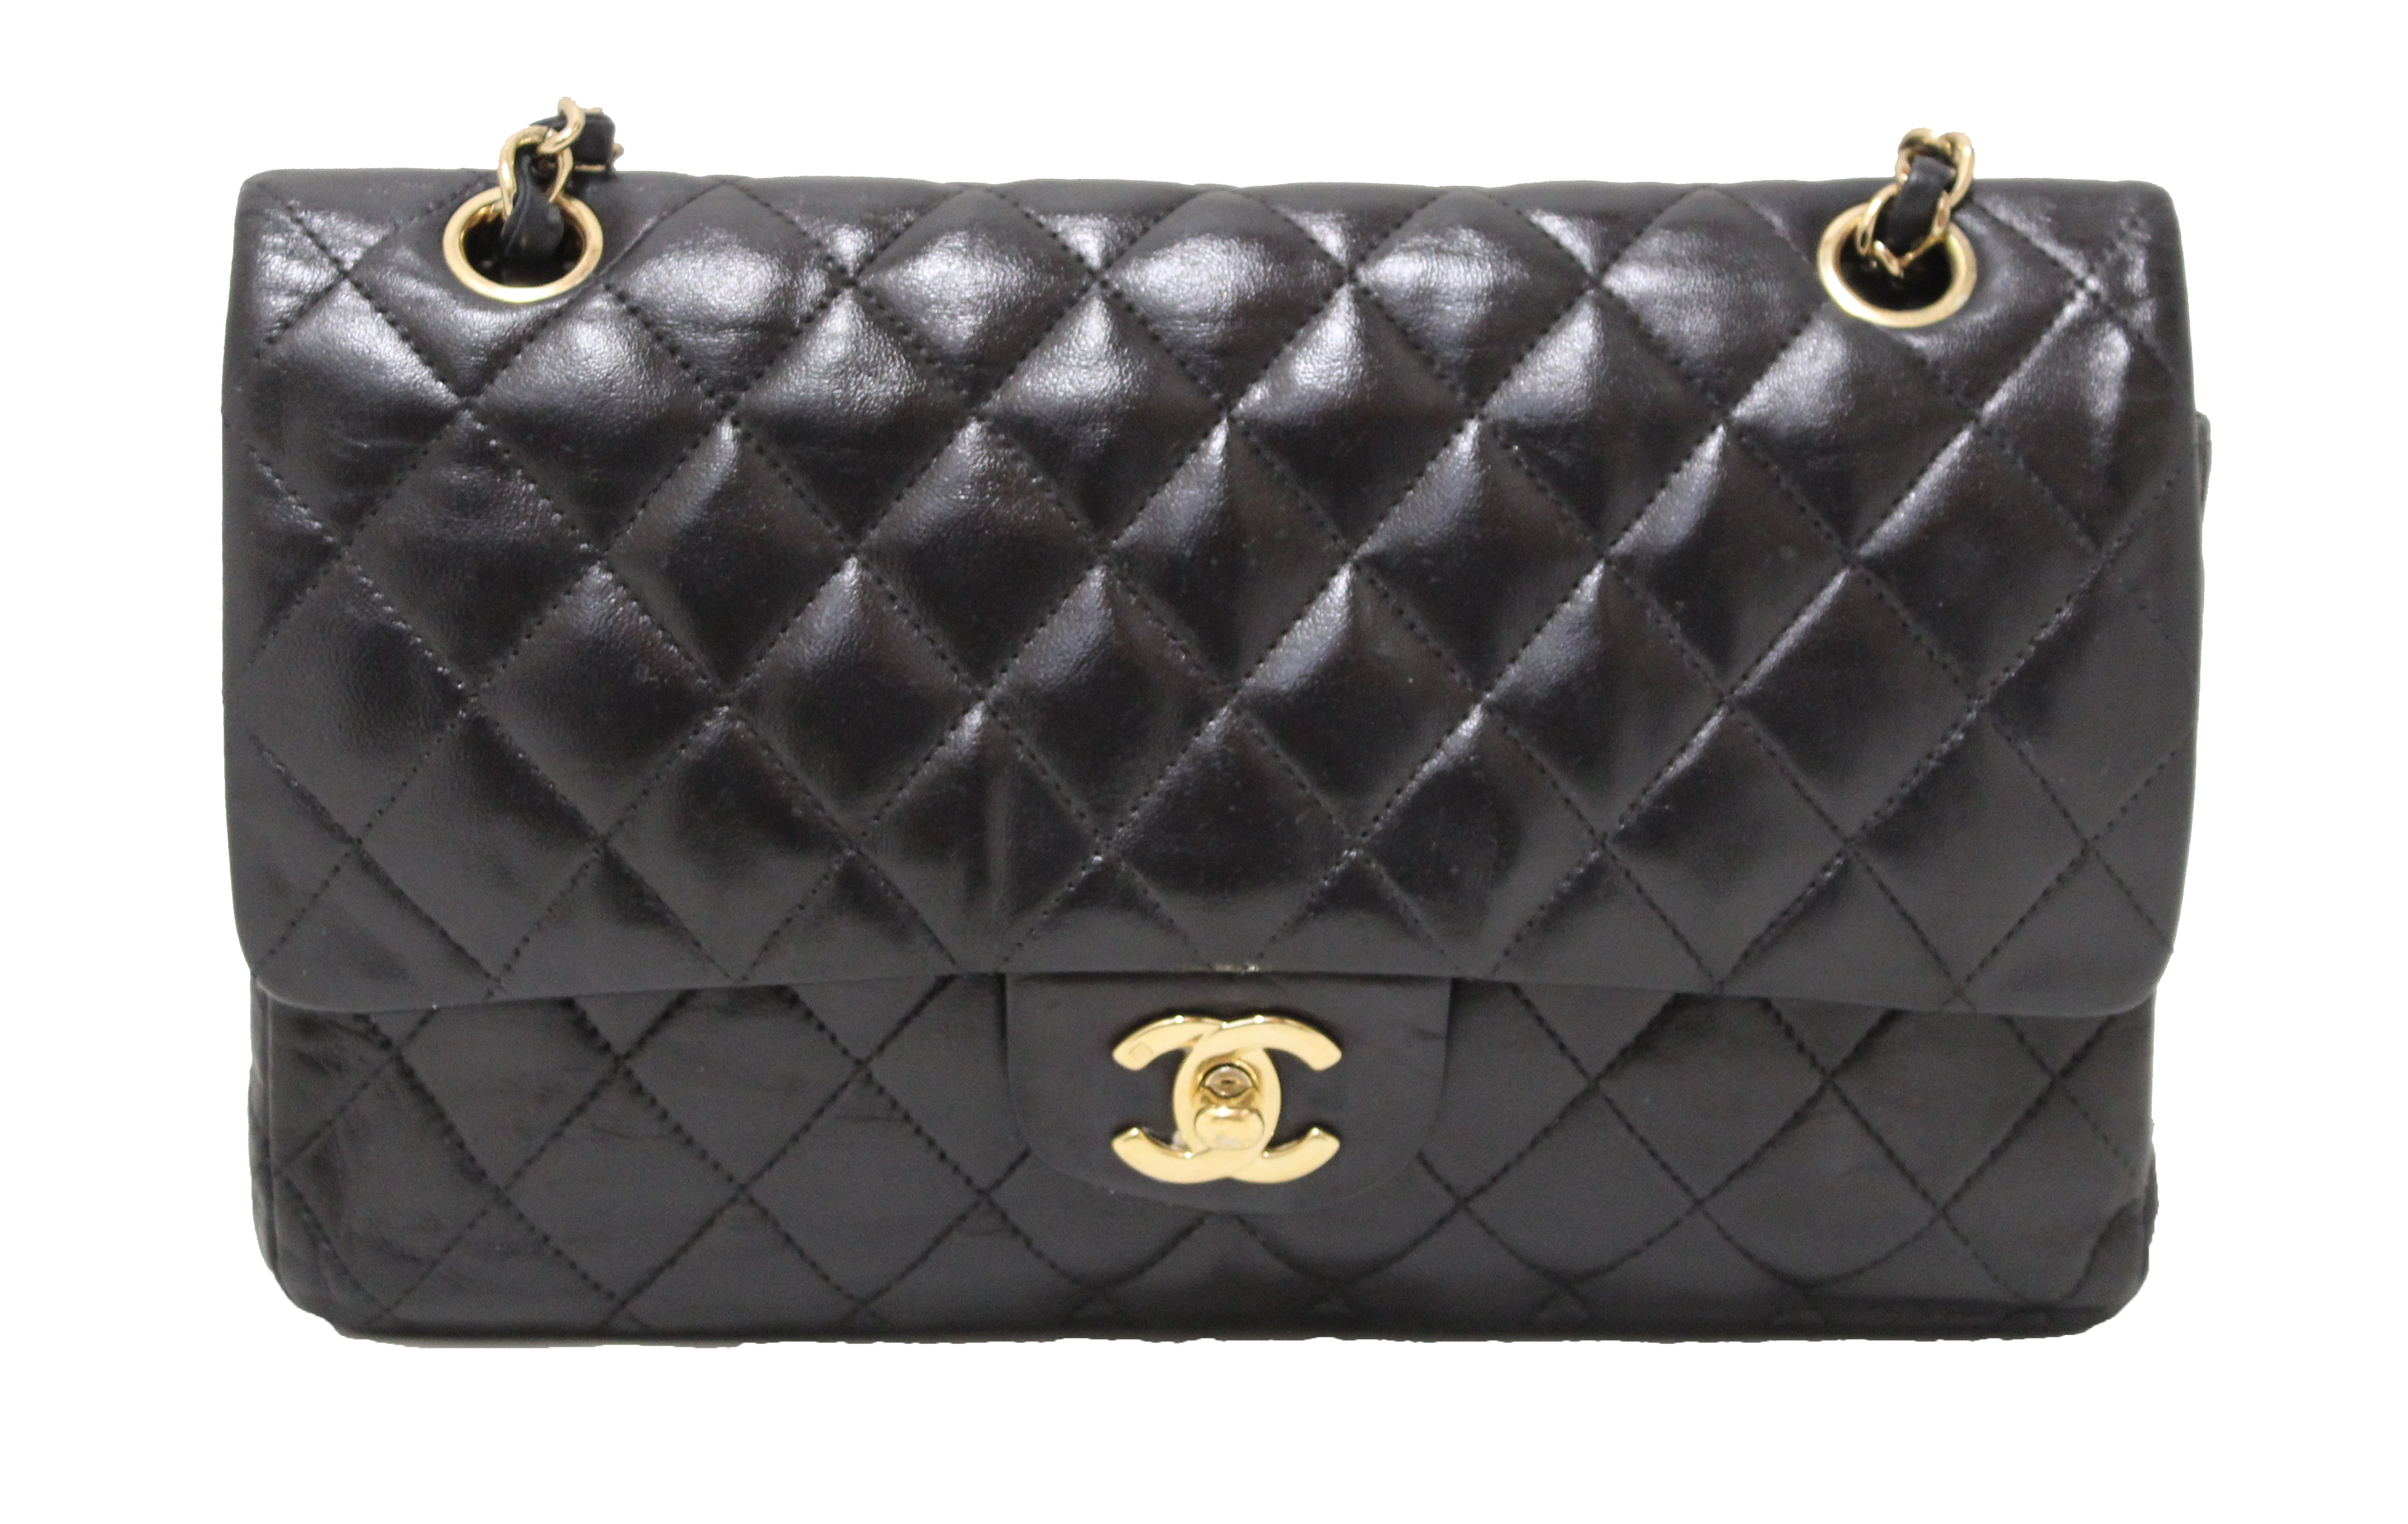 Authentic Chanel Black Medium Lambskin Leather CC